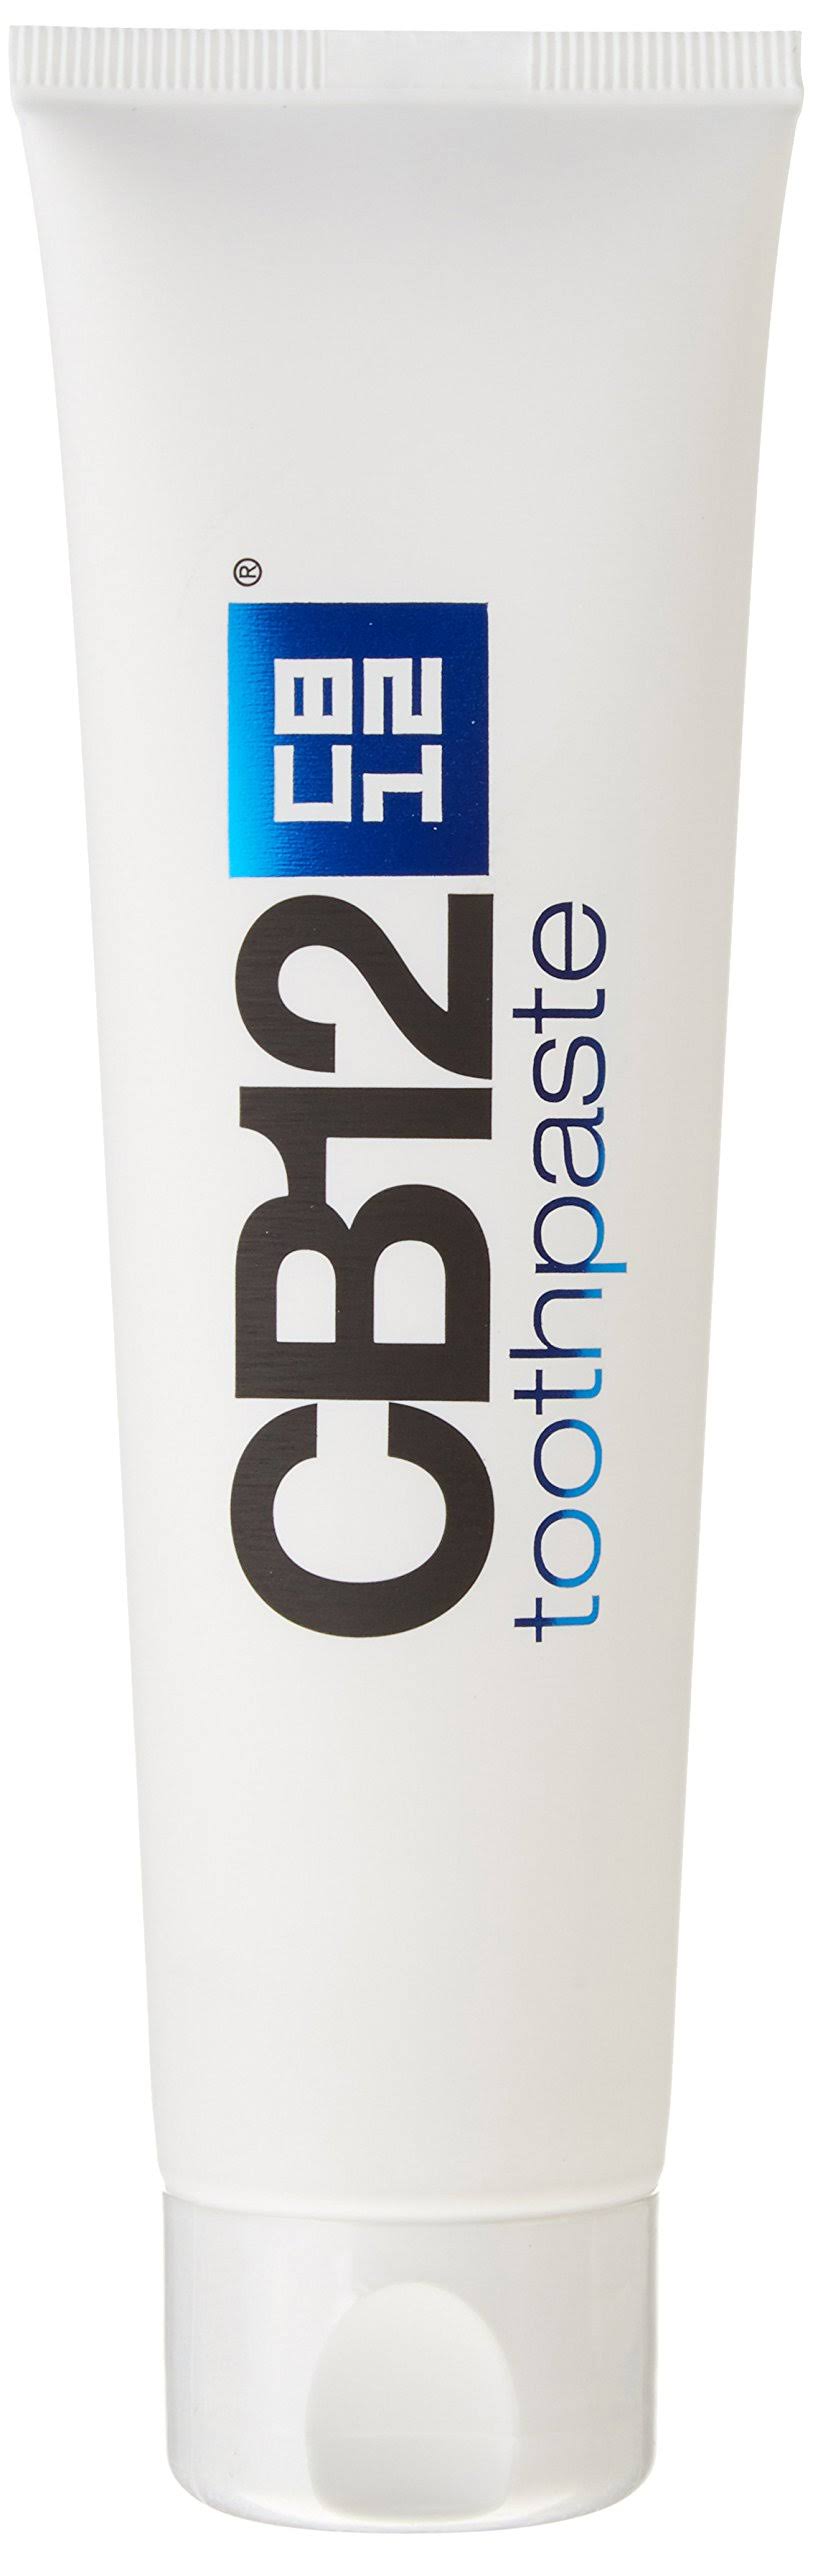 CB12 Toothpaste 100ml - New Bad Breath Halitosis Smokers Whitening